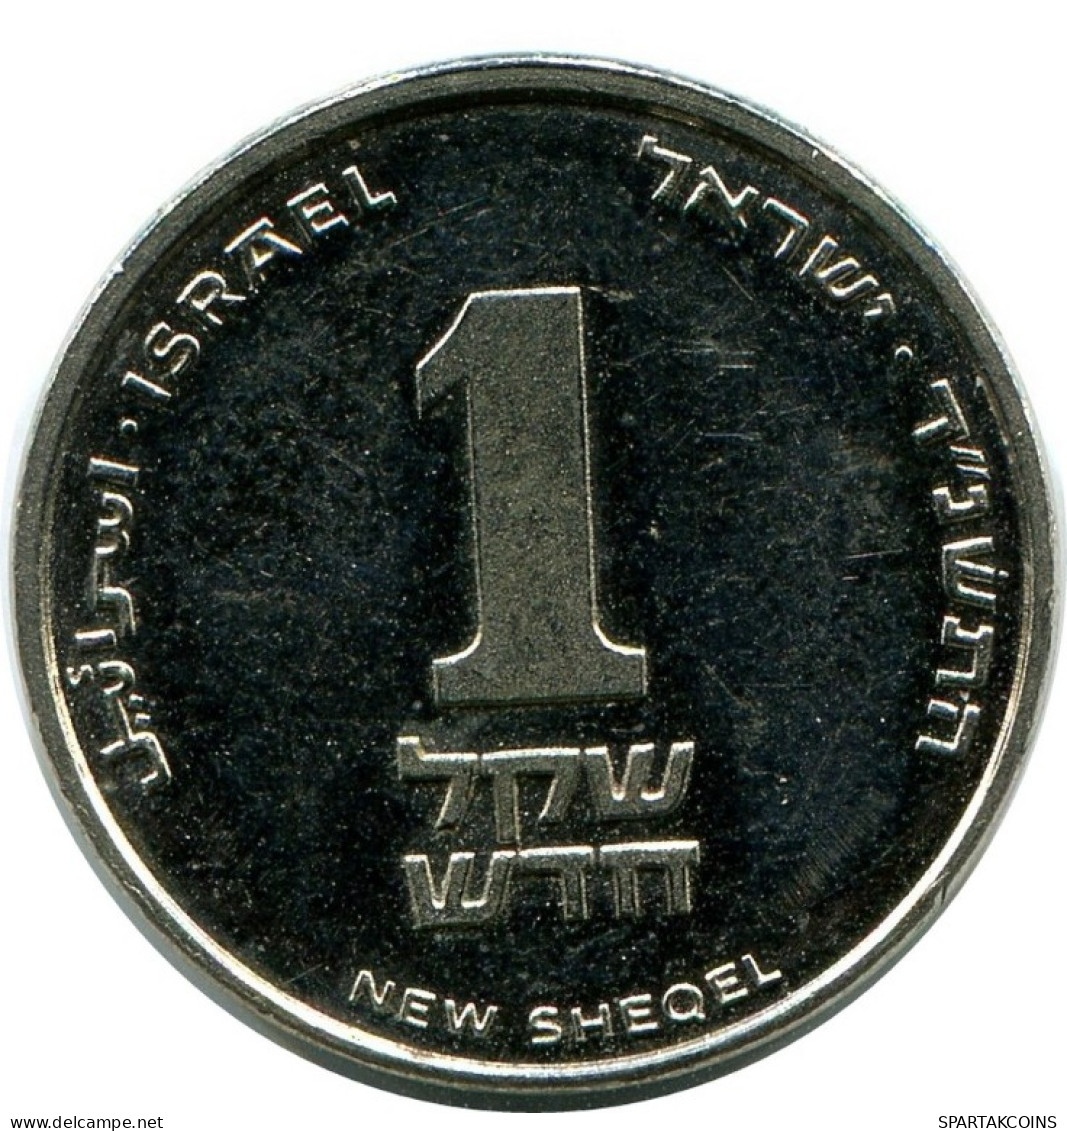 1 NEW SHEQEL 1994 ISRAEL Münze #AH950.D.A - Israël